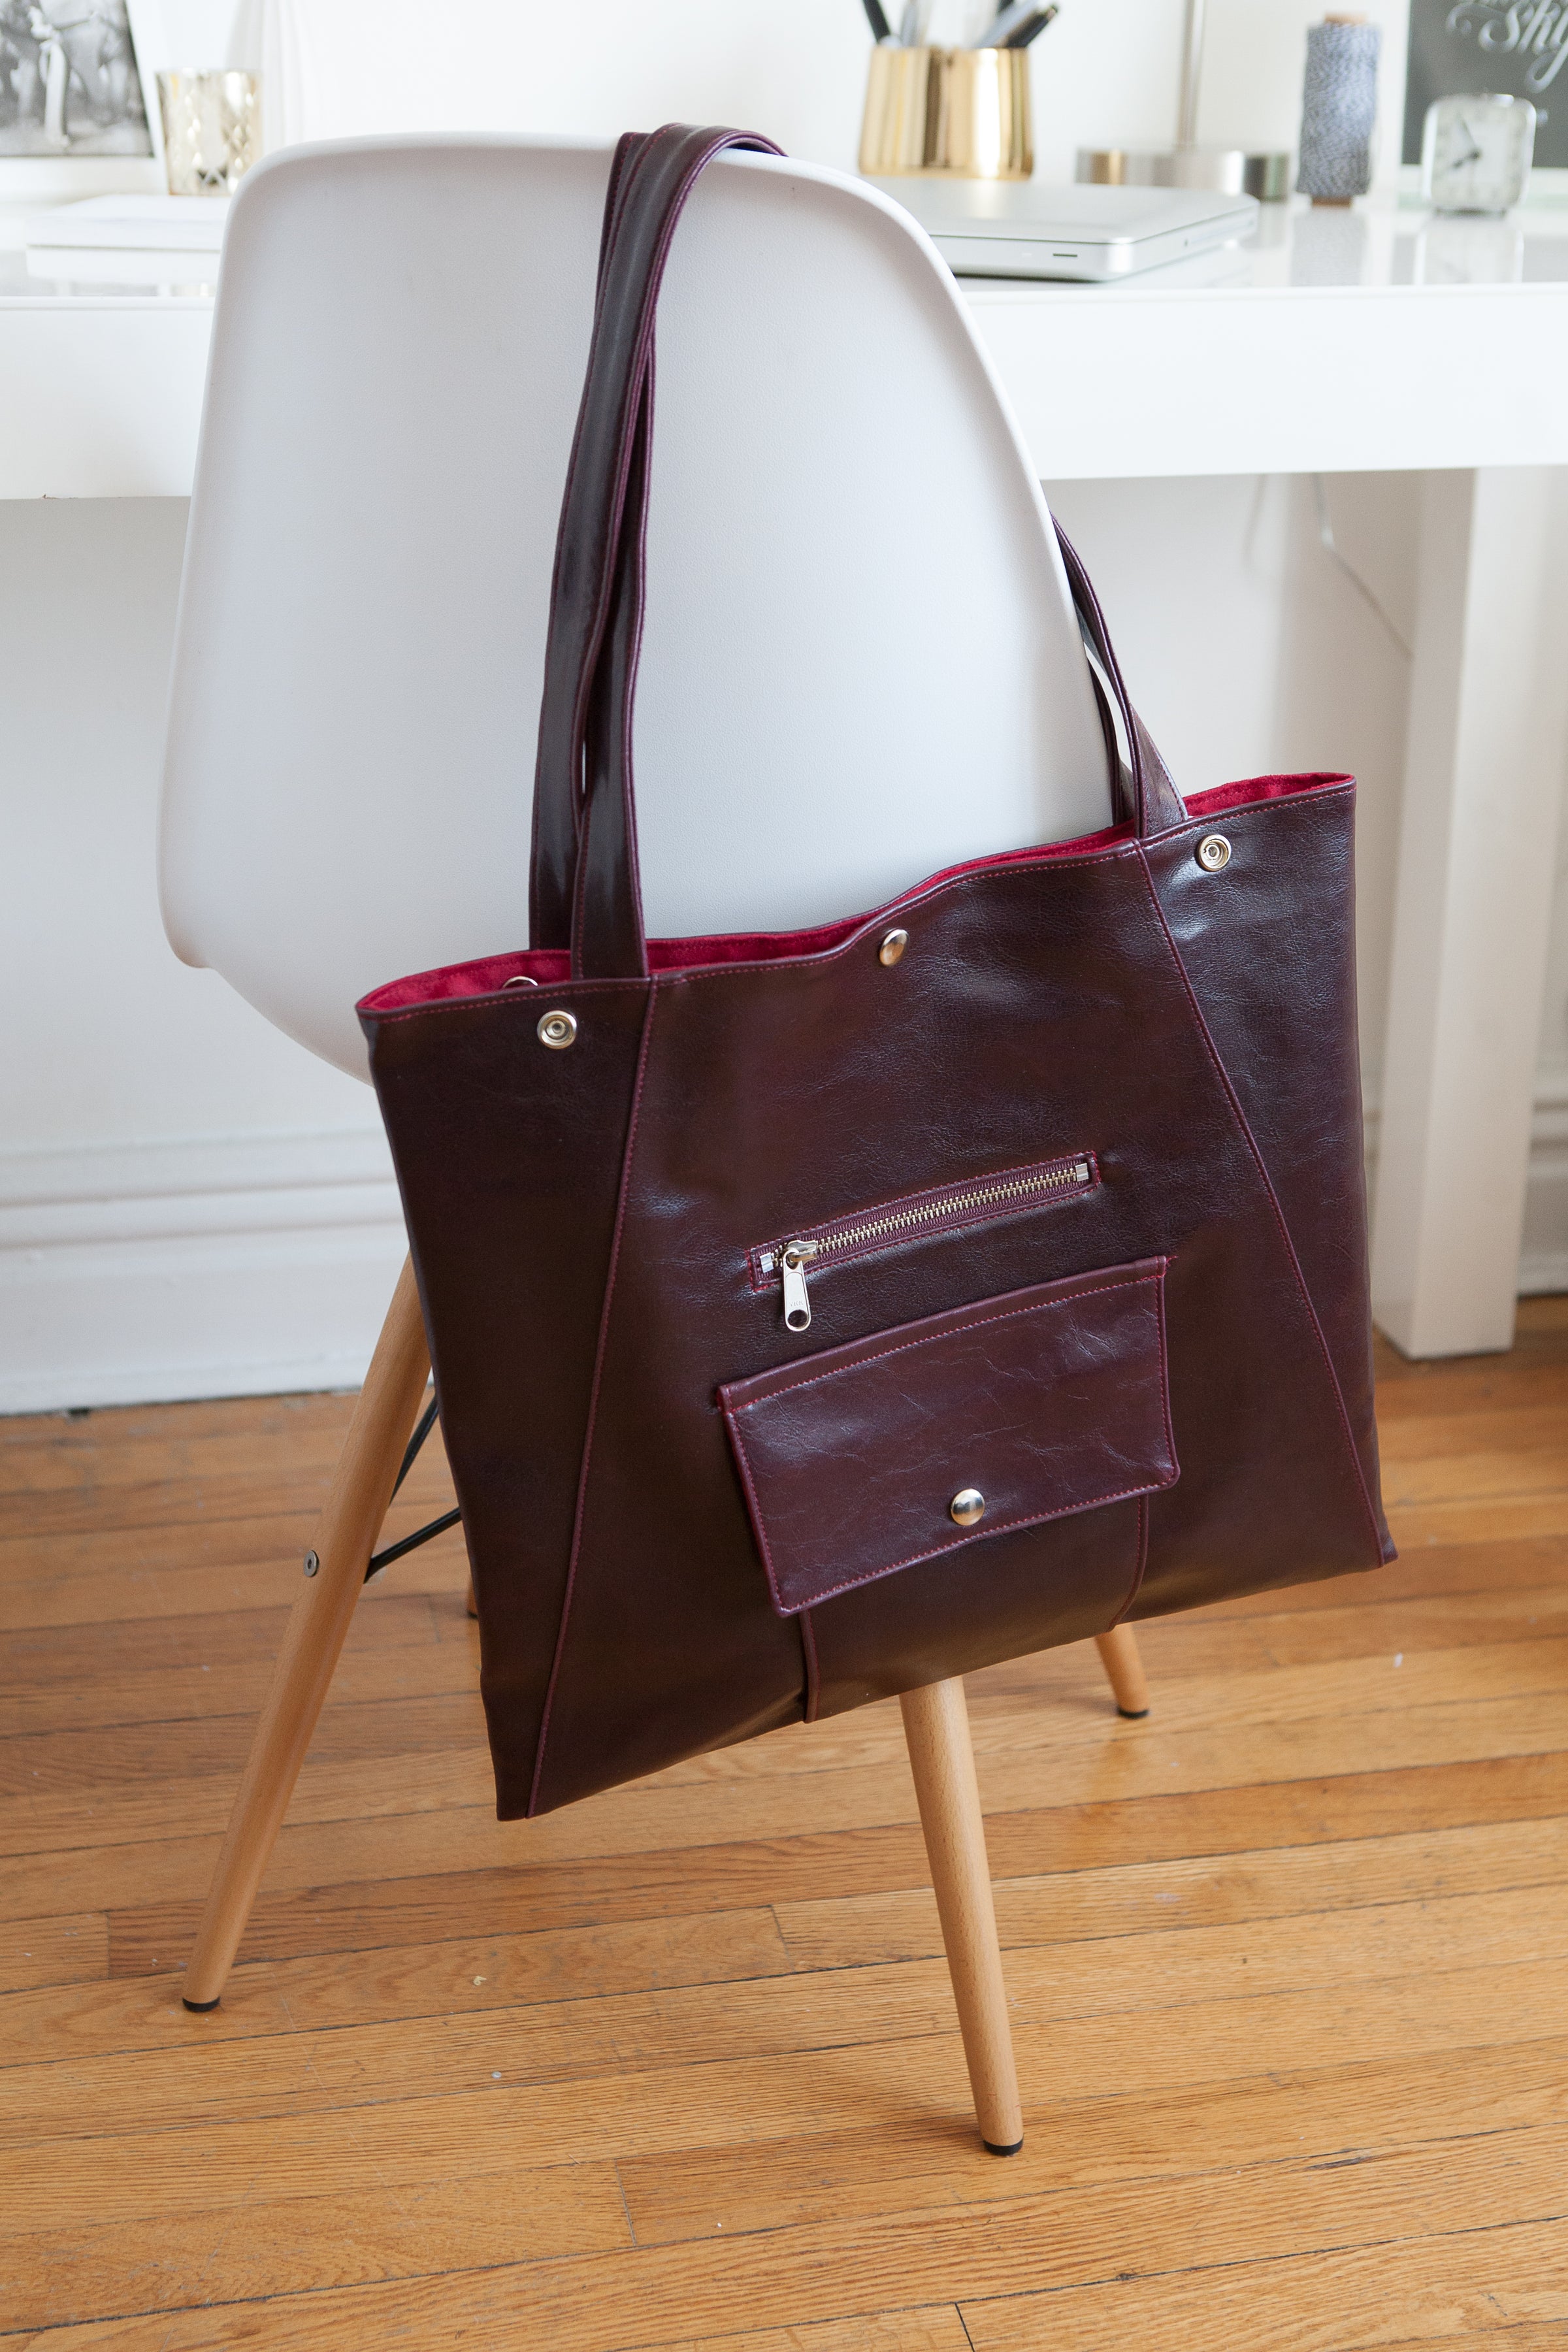 wine sleek work tote bag in burgundy washable leather